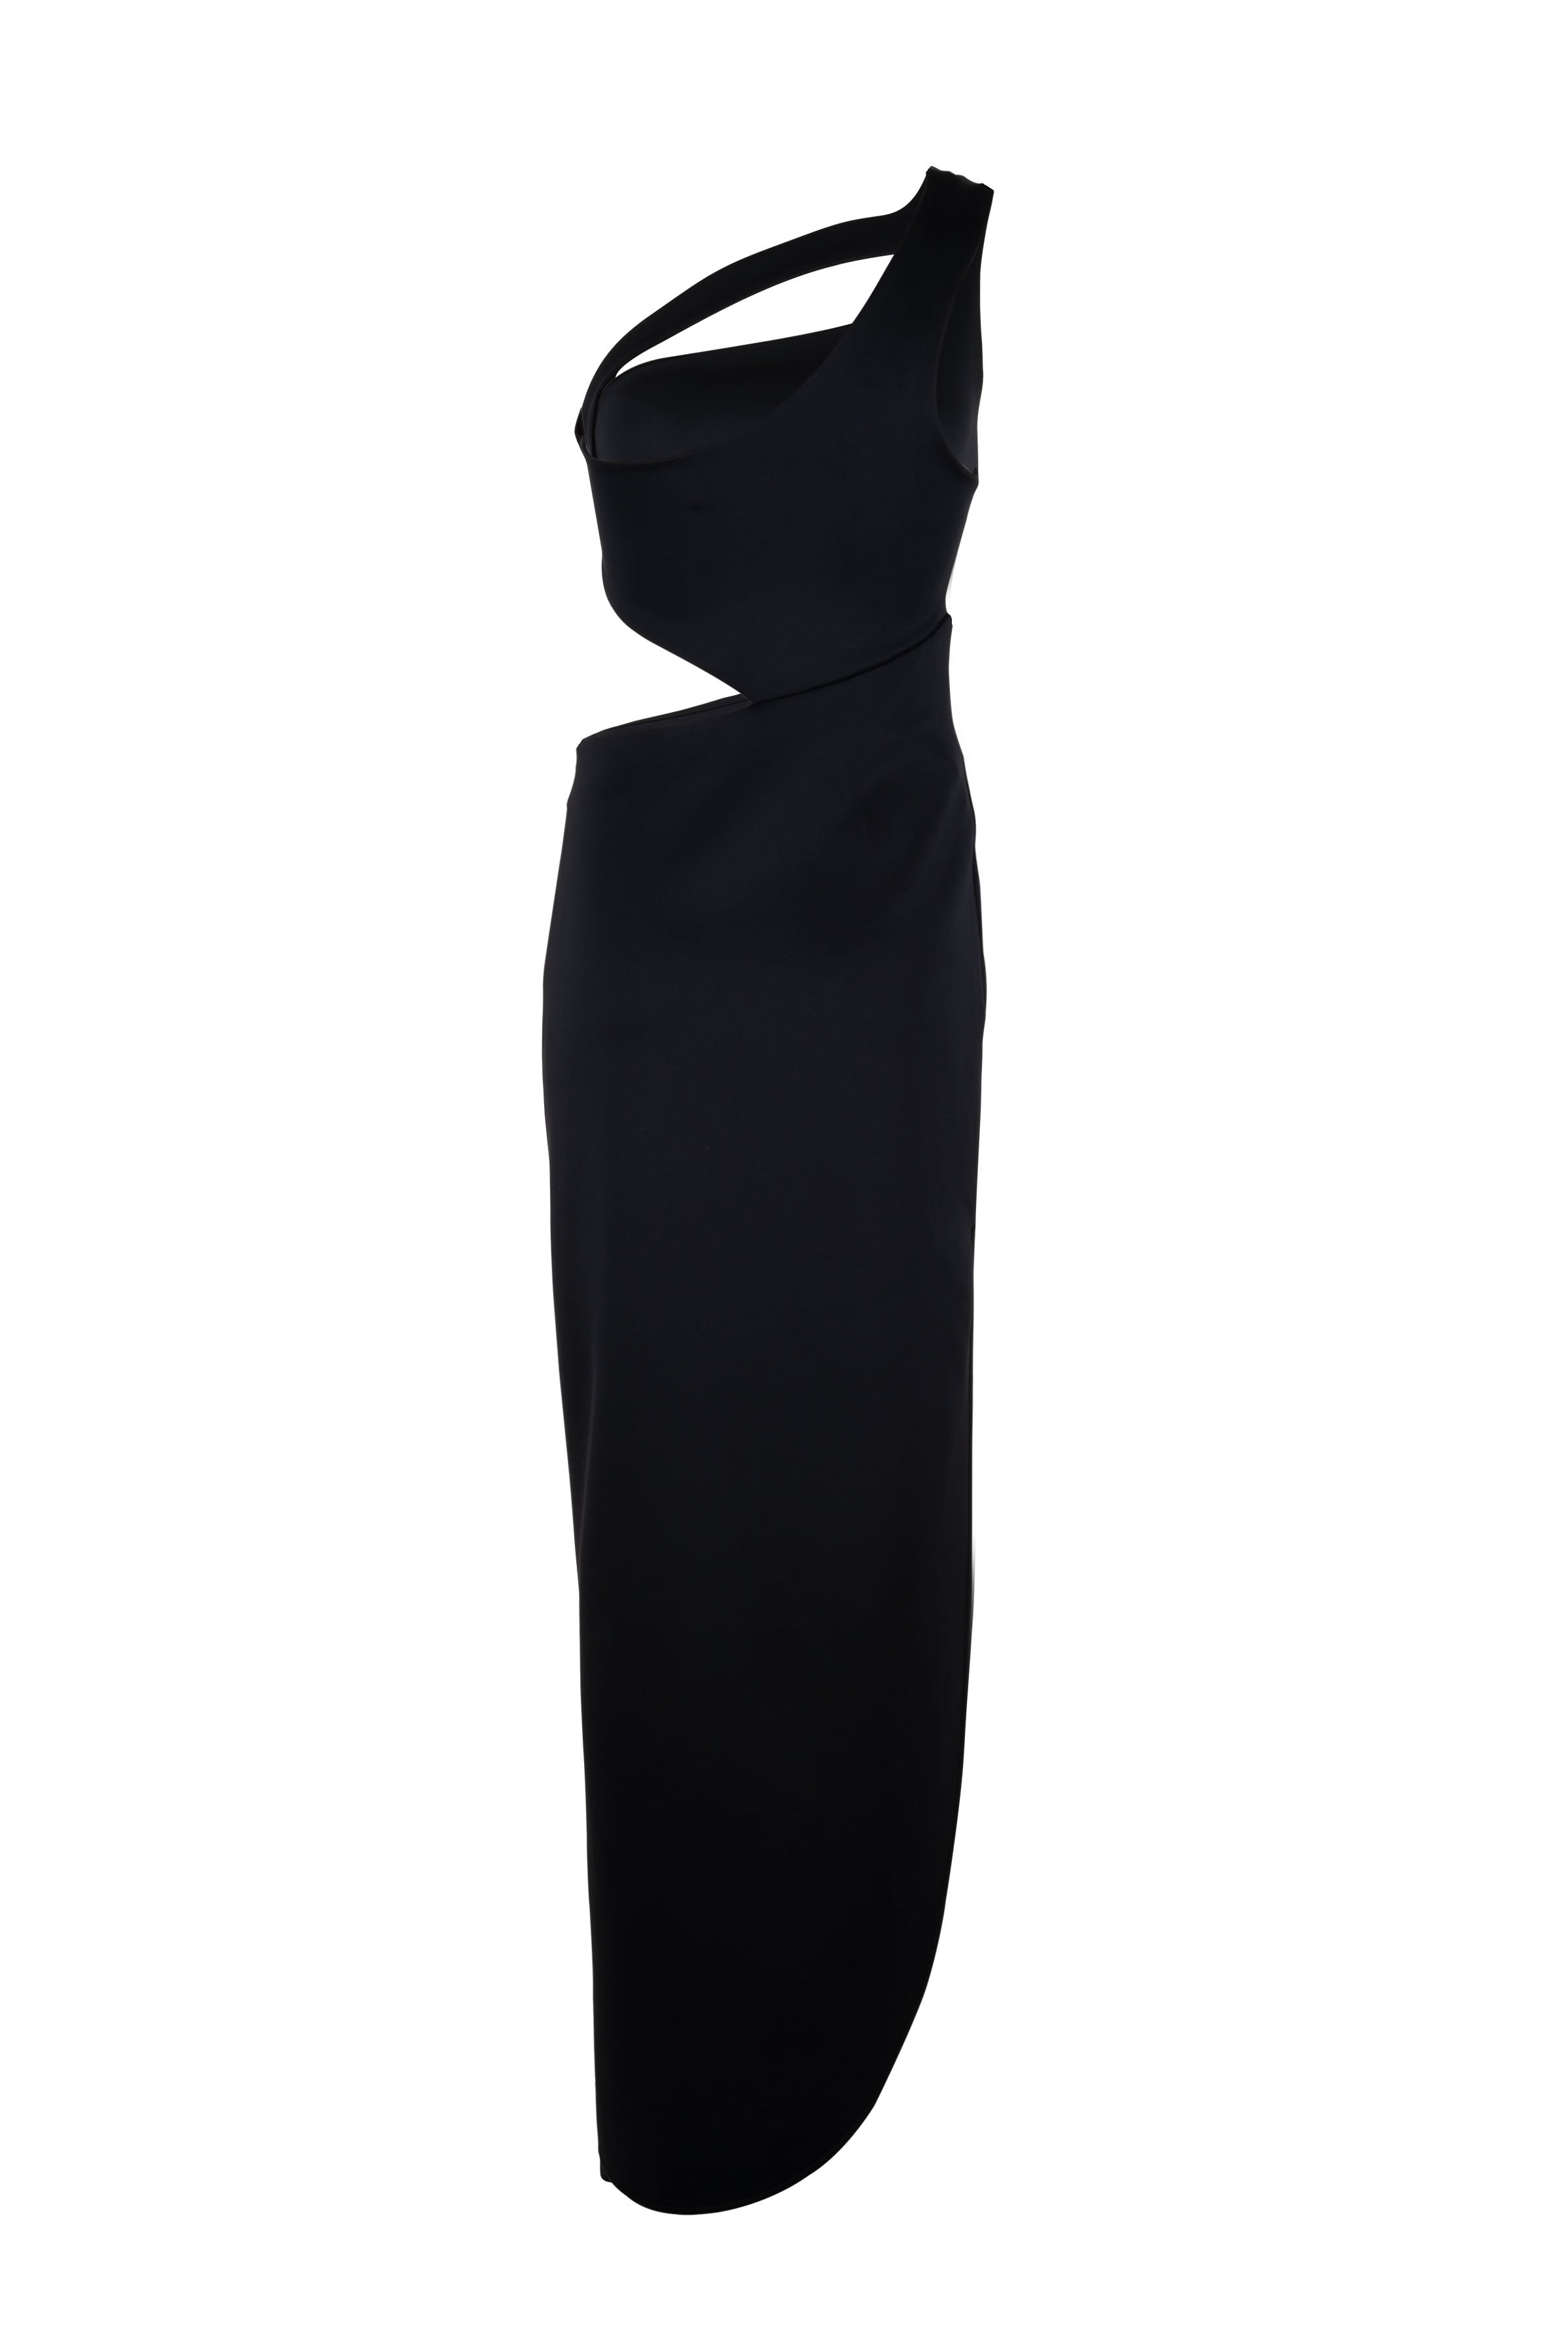 CRAS Sahara Dress Dress 9999 Black